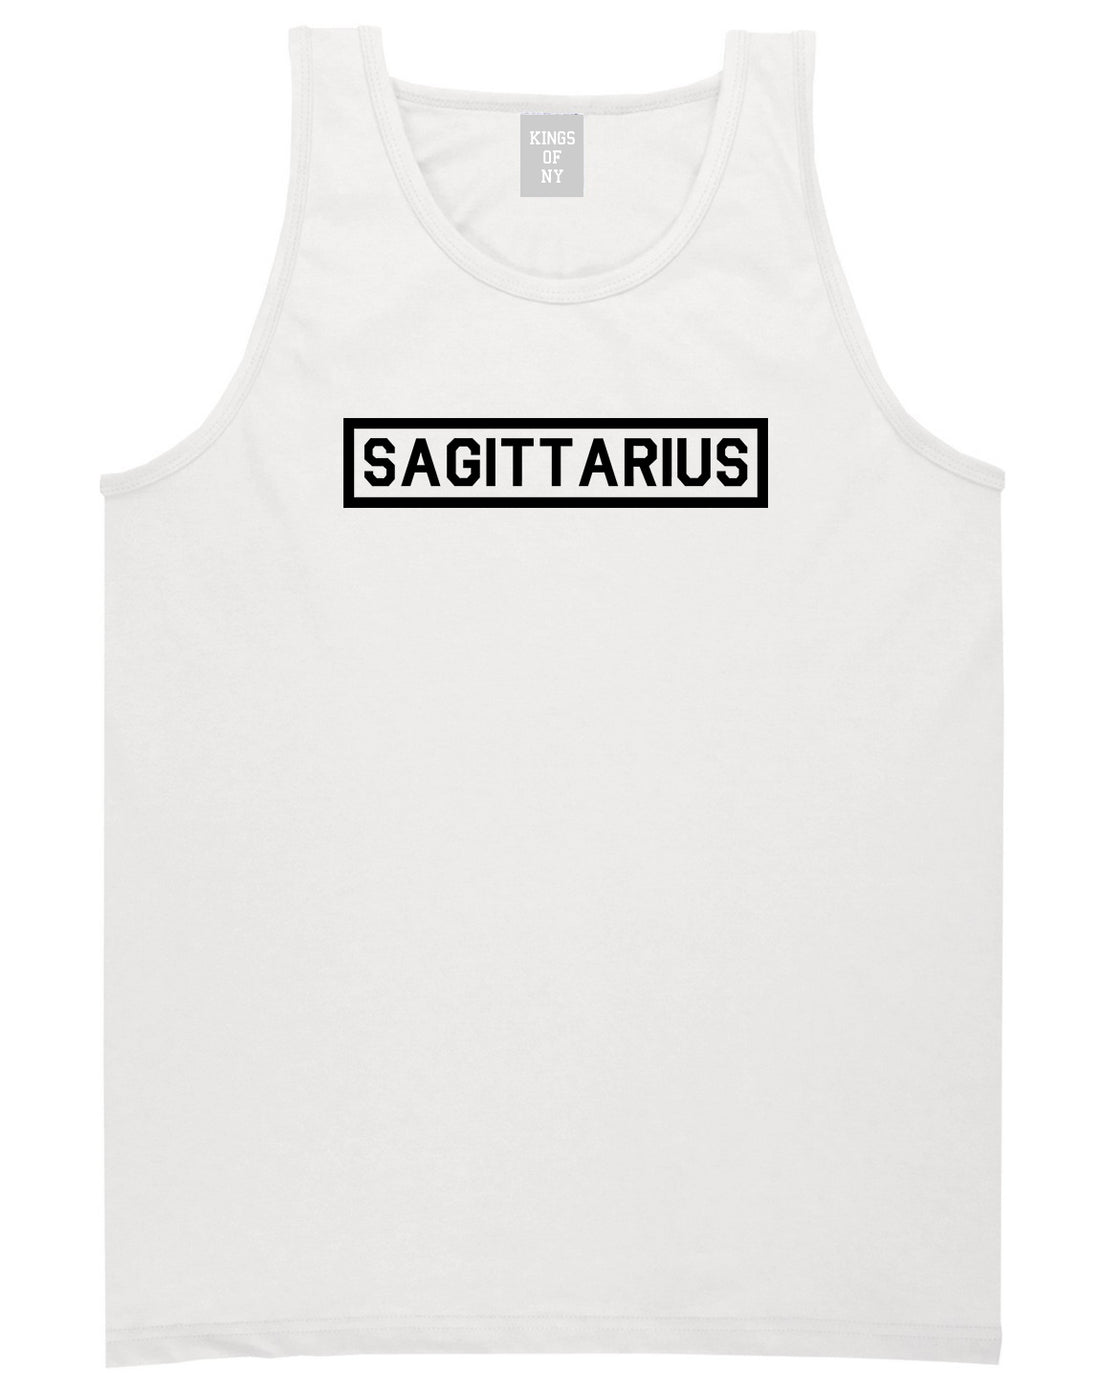 Sagittarius Horoscope Sign Mens White Tank Top Shirt by KINGS OF NY